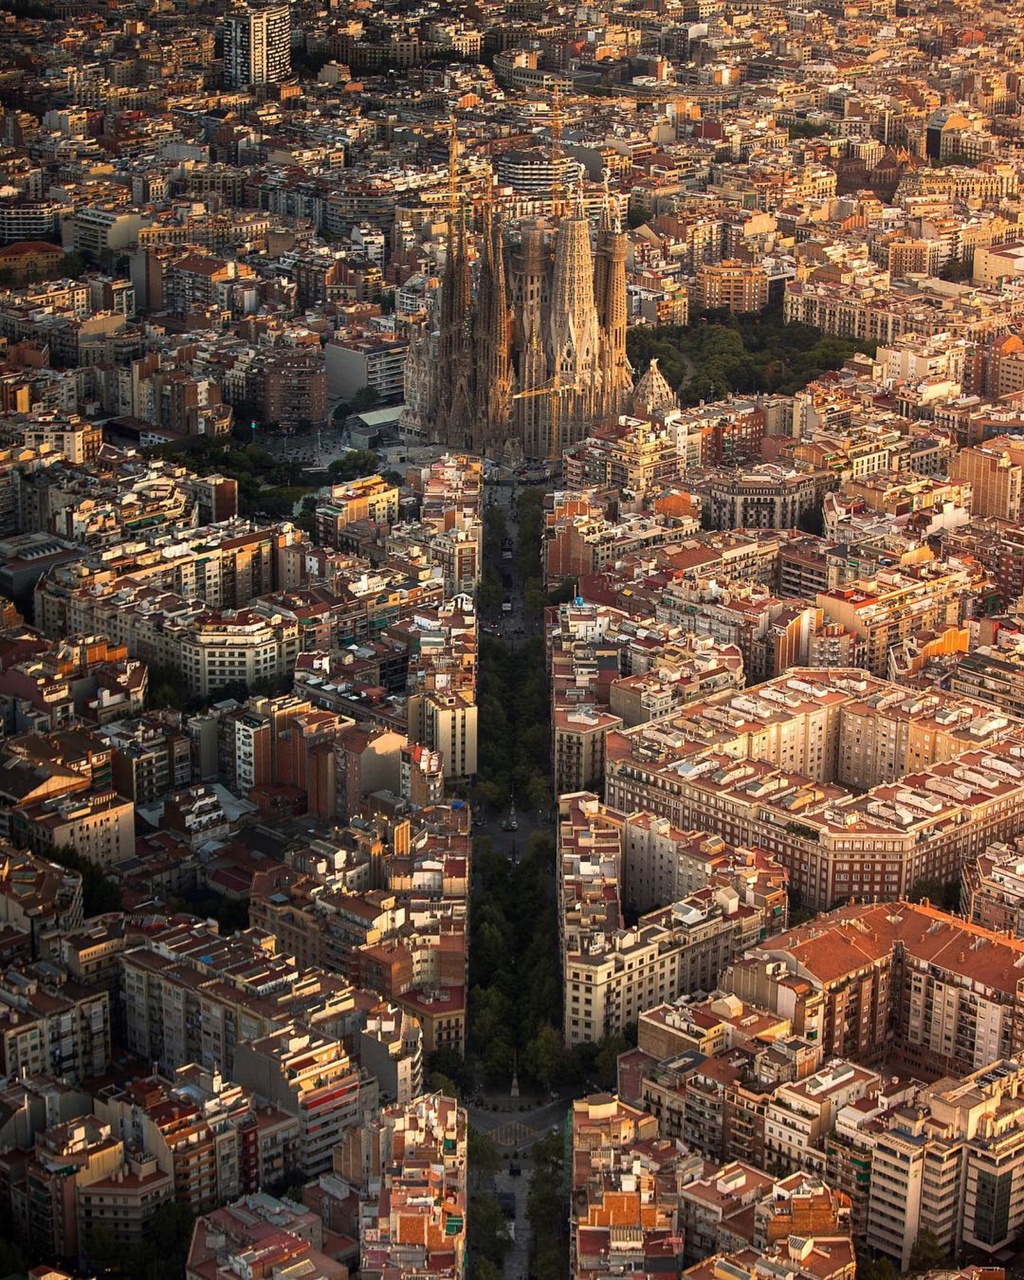 Dan sao ‘Ky sinh trung’ tung du lich nhung dia danh nao hinh anh 6 Barcelona_Architecture_Virginia_Duran_6_Sagrada_Familia.jpg